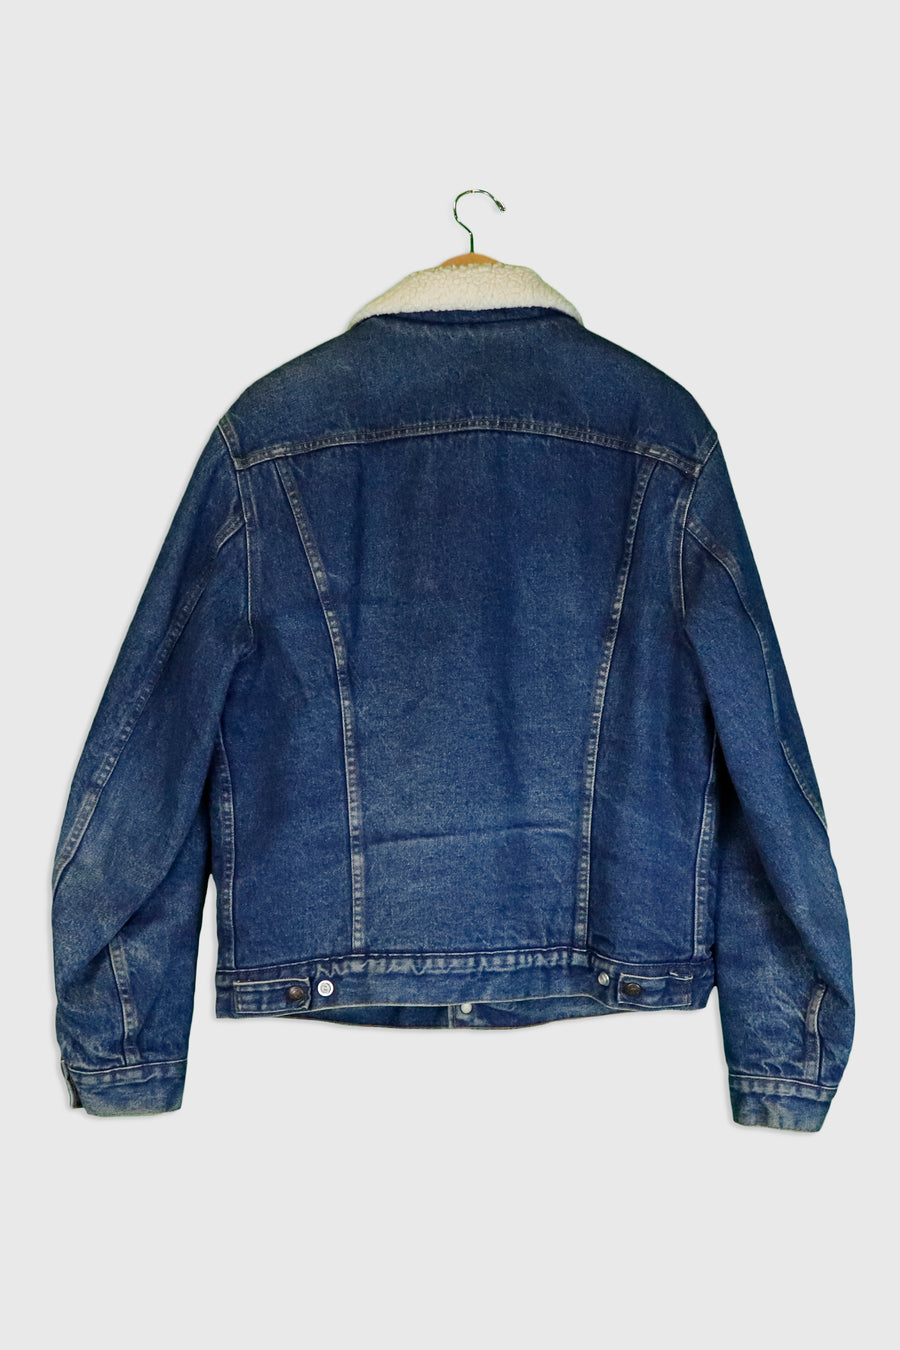 Vintage Levi's Sanfransisco Denim Jacket Sz L